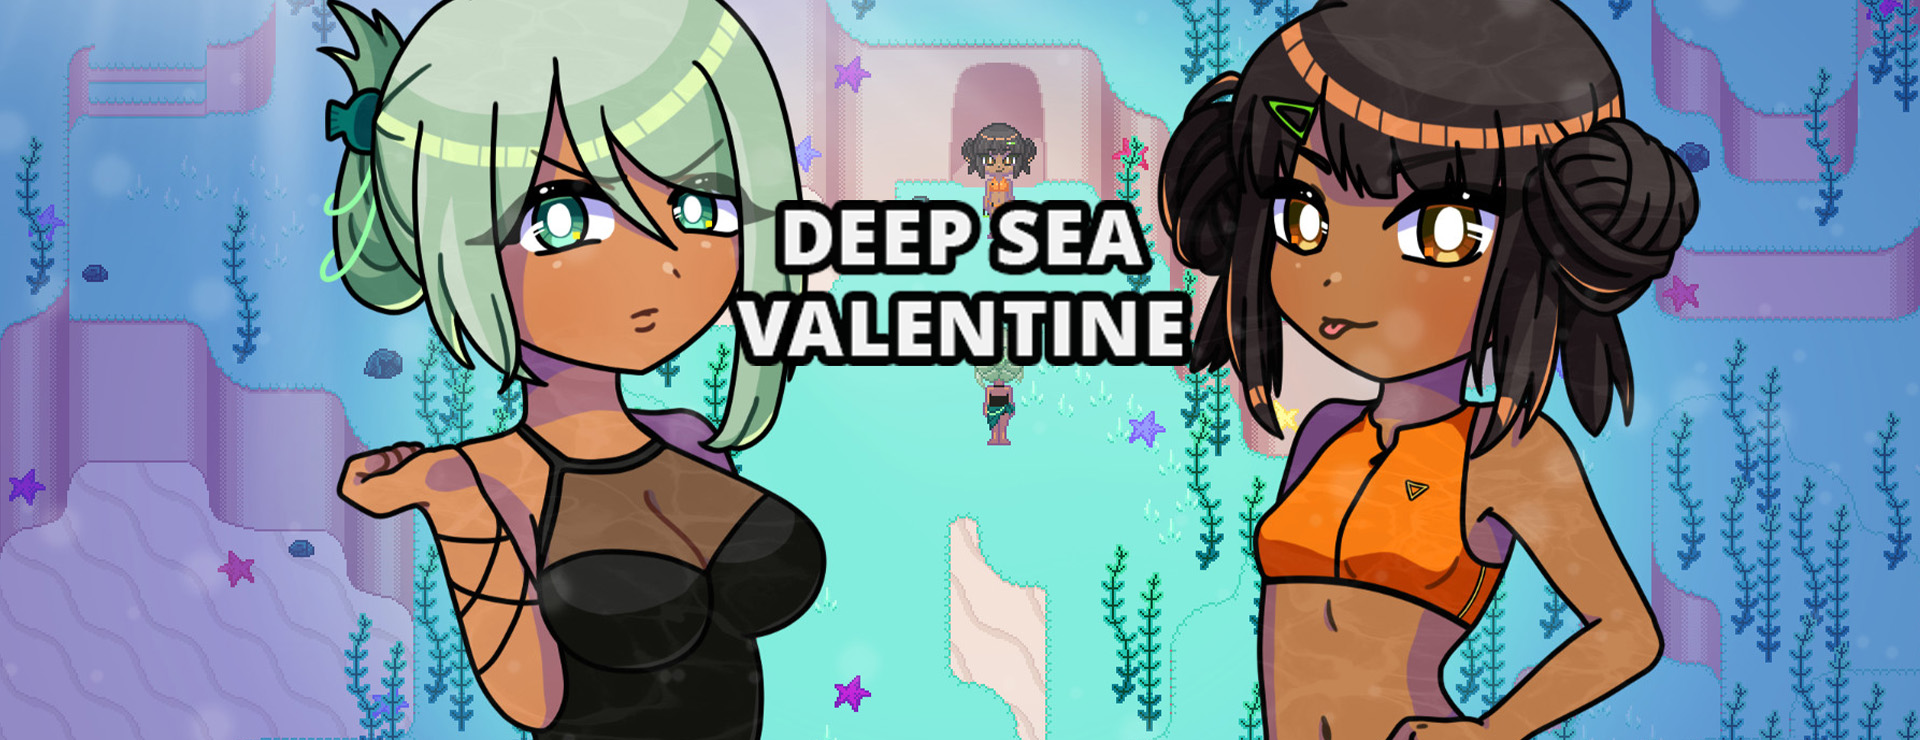 Deep Sea Valentine - Powieść wizualna Gra